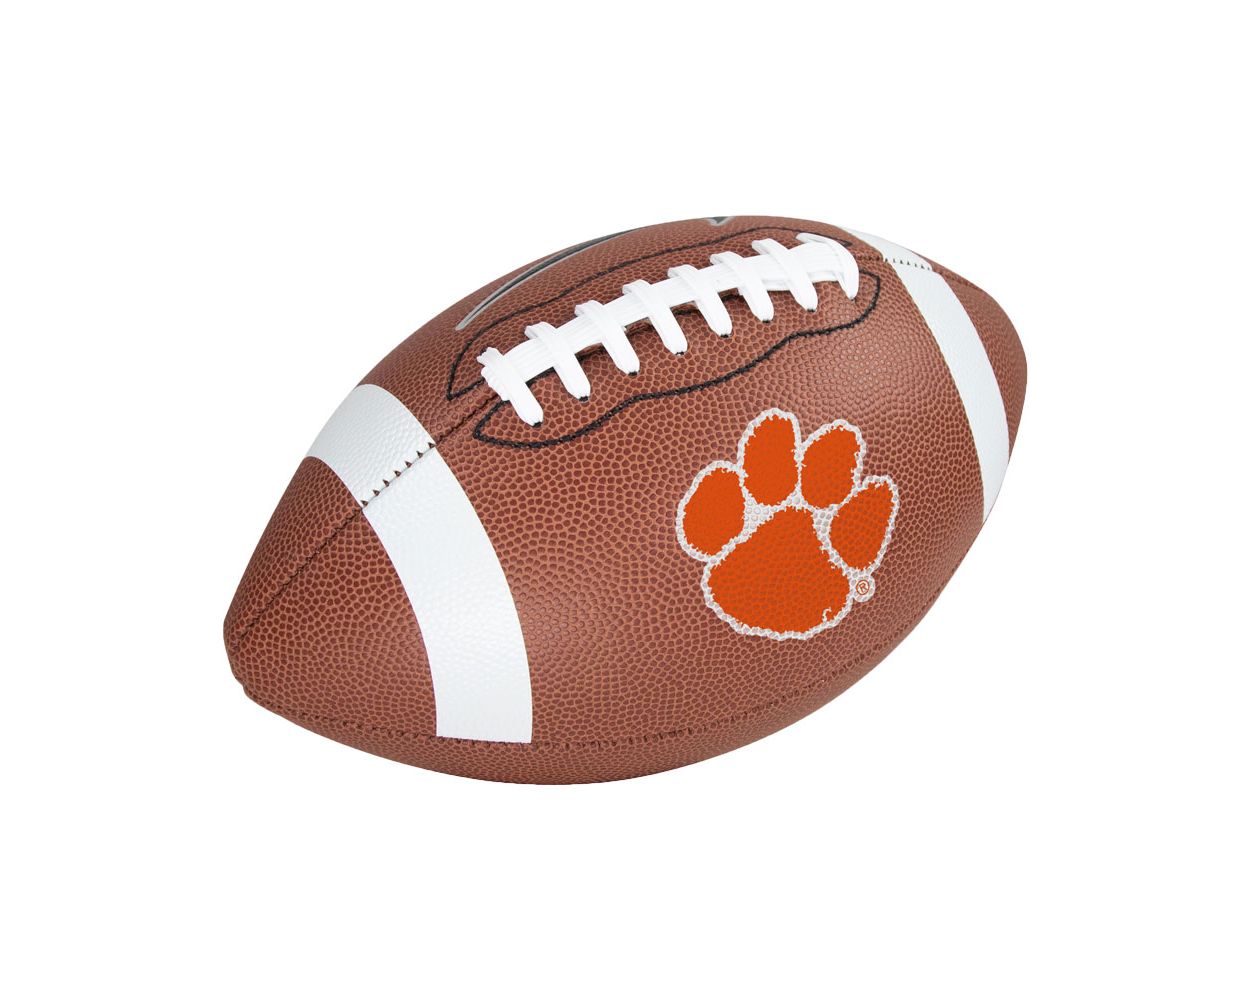 Clemson Tigers NCAA Official Replica Dog Jersey